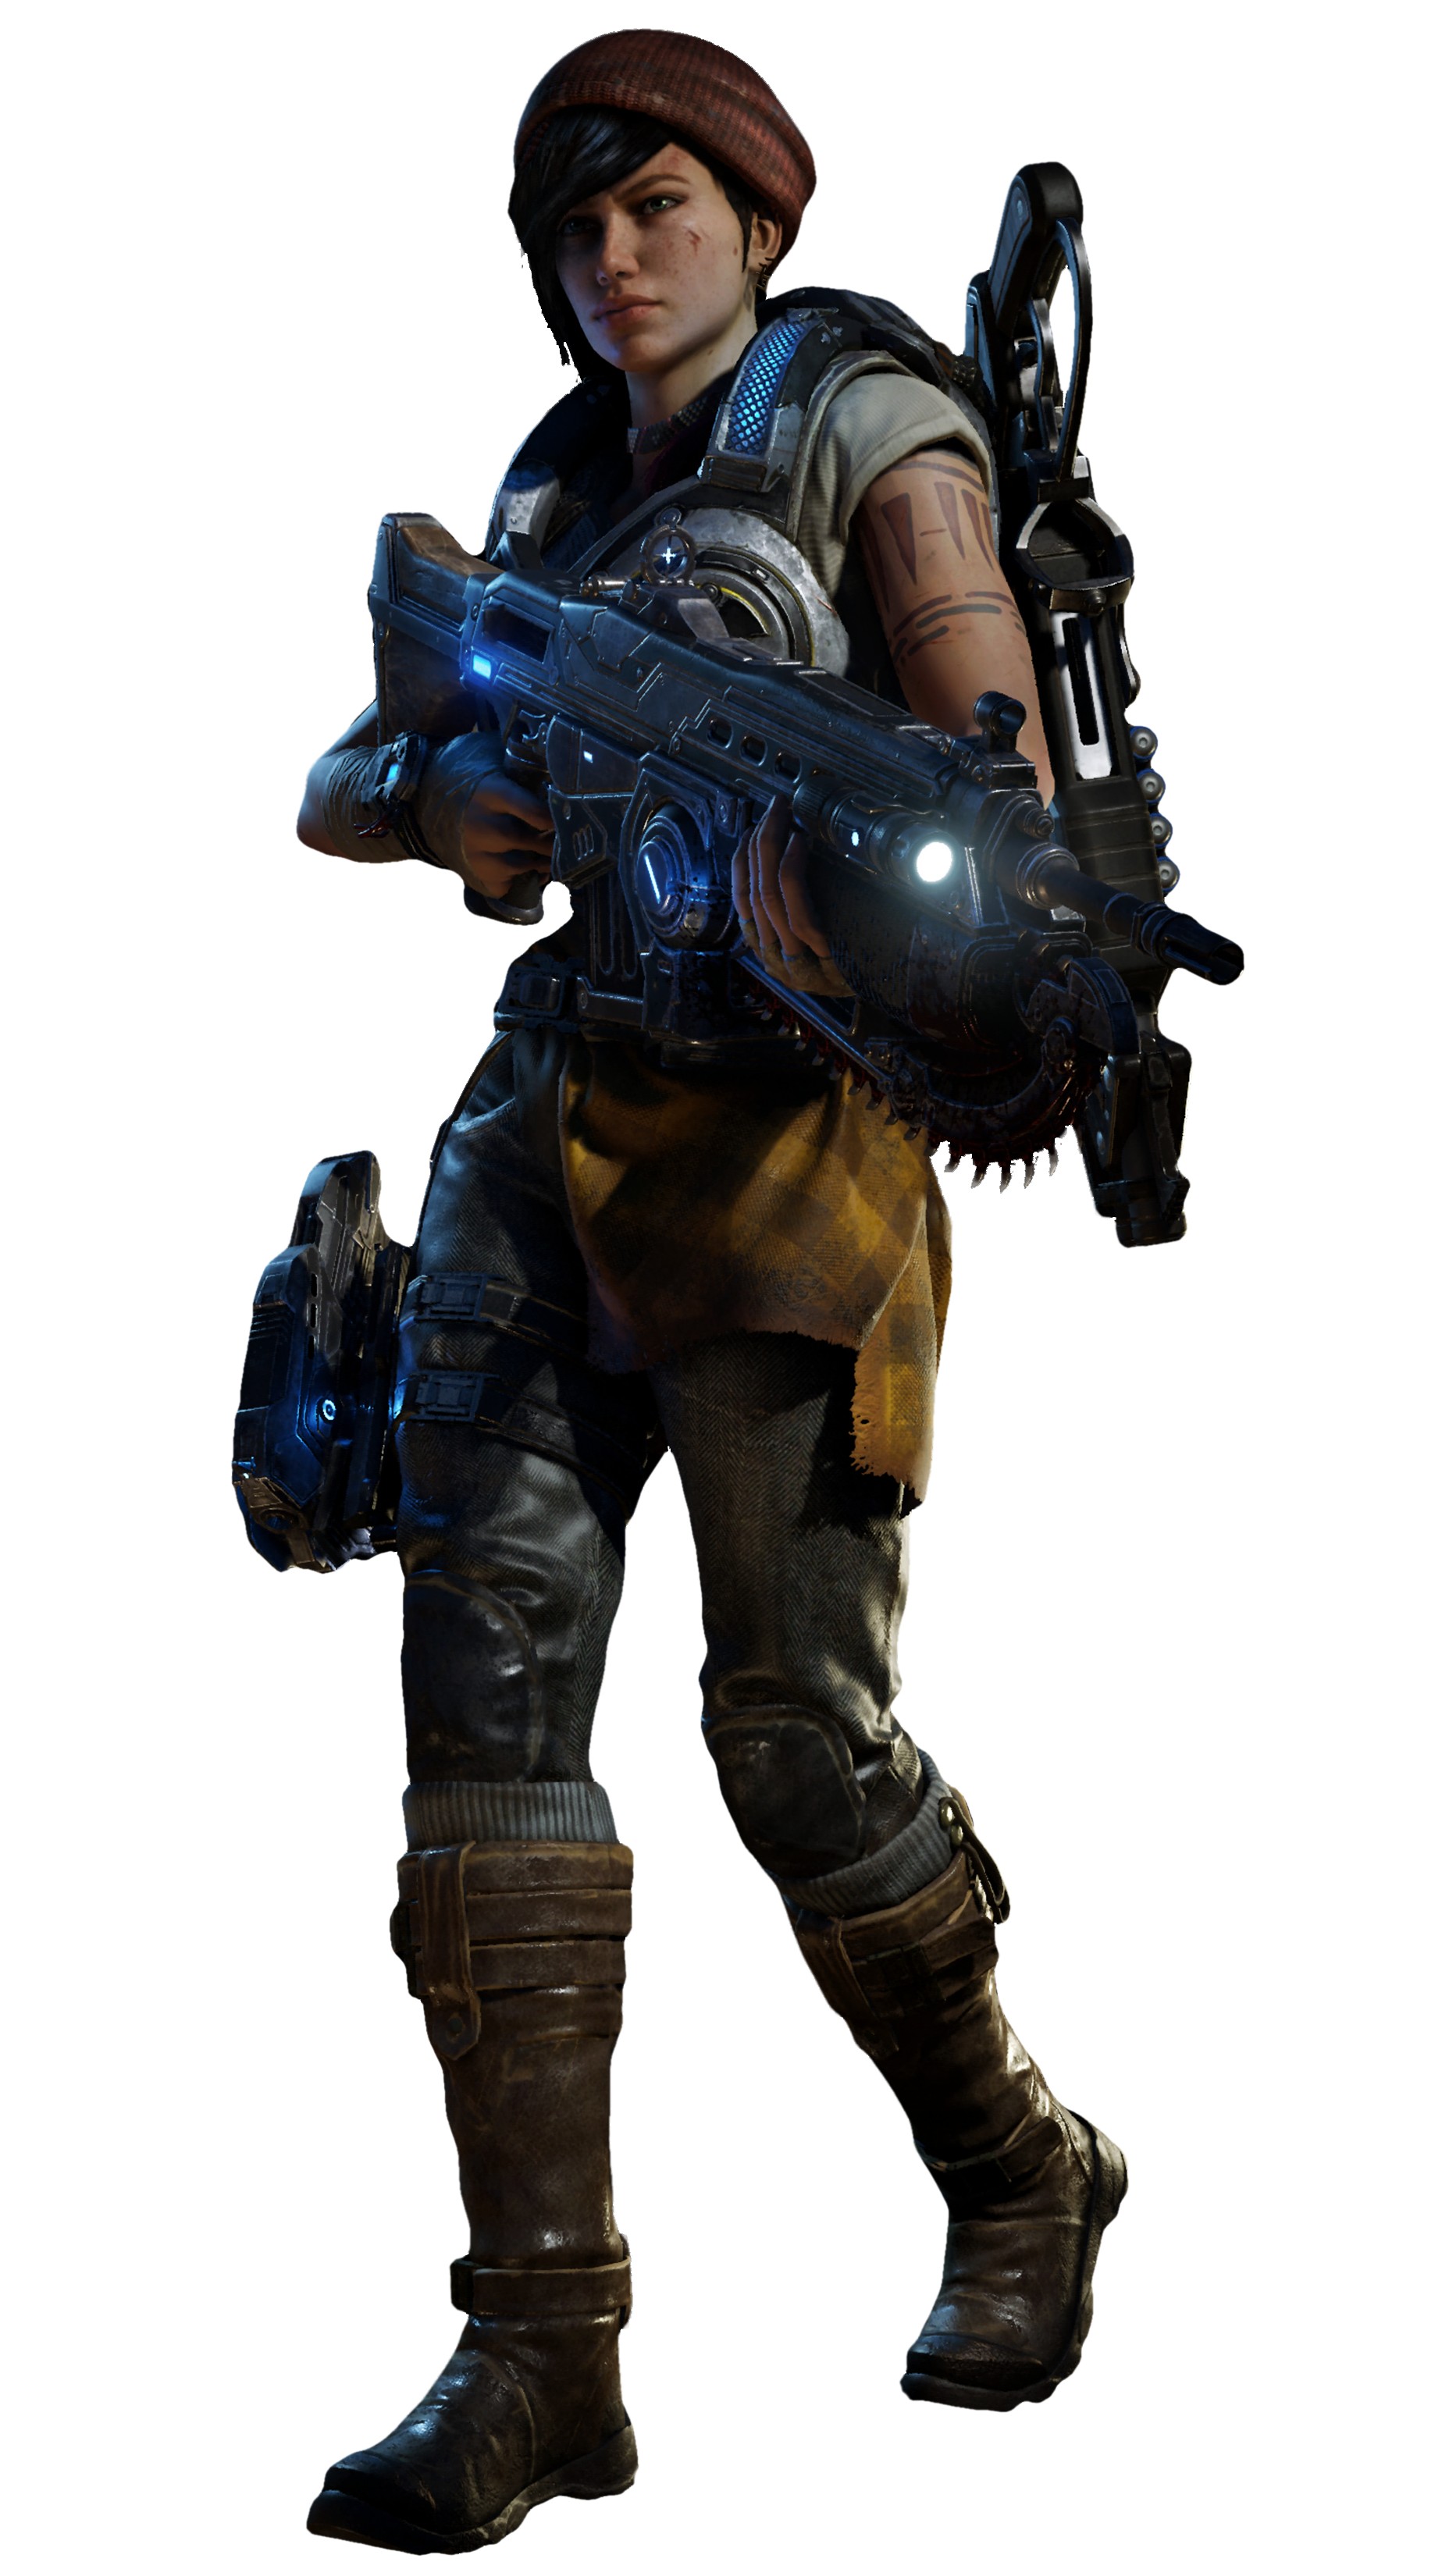 kait diaz, Gears of War 4, PC gaming Wallpaper